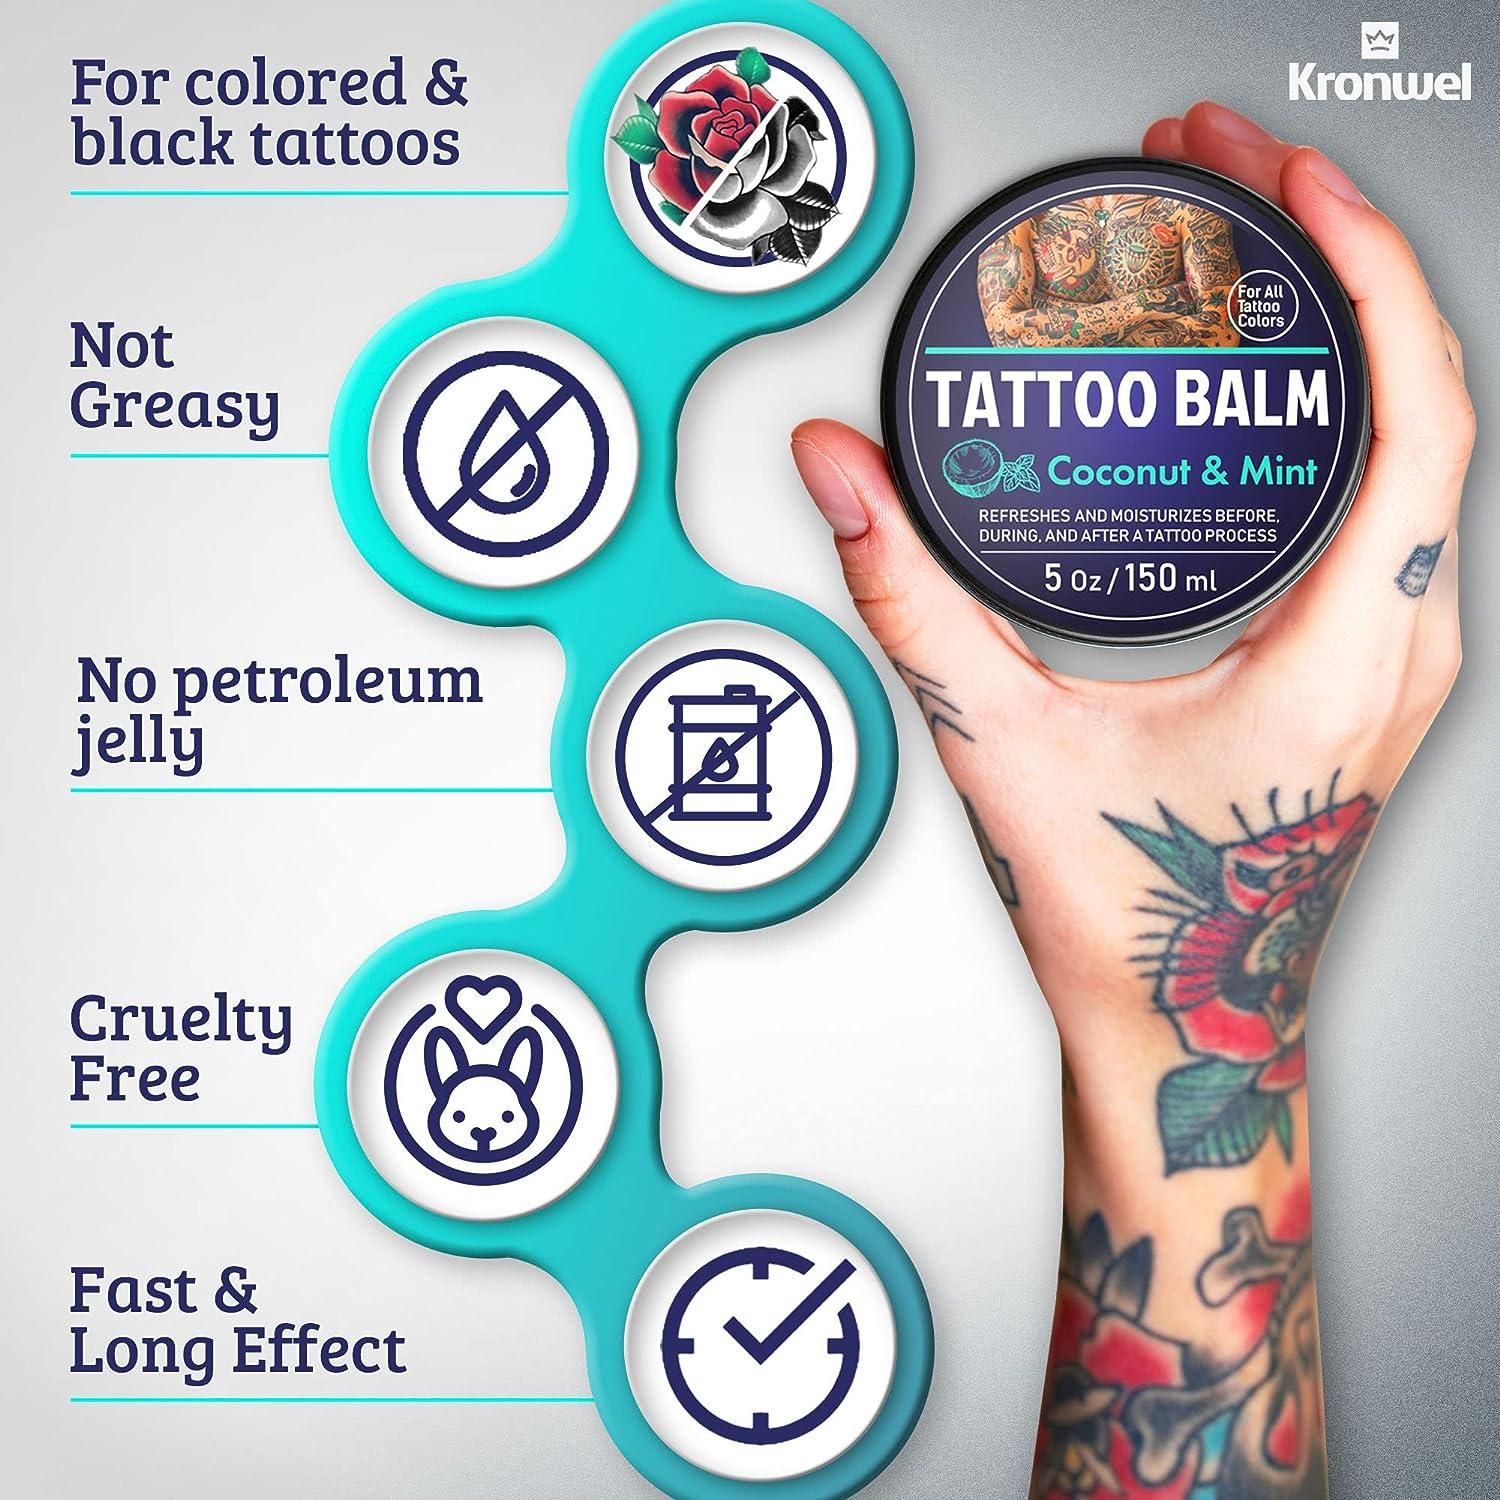 ink nurse - AUS #1 Selling Tattoo Care (@inknurse) • Instagram photos and  videos